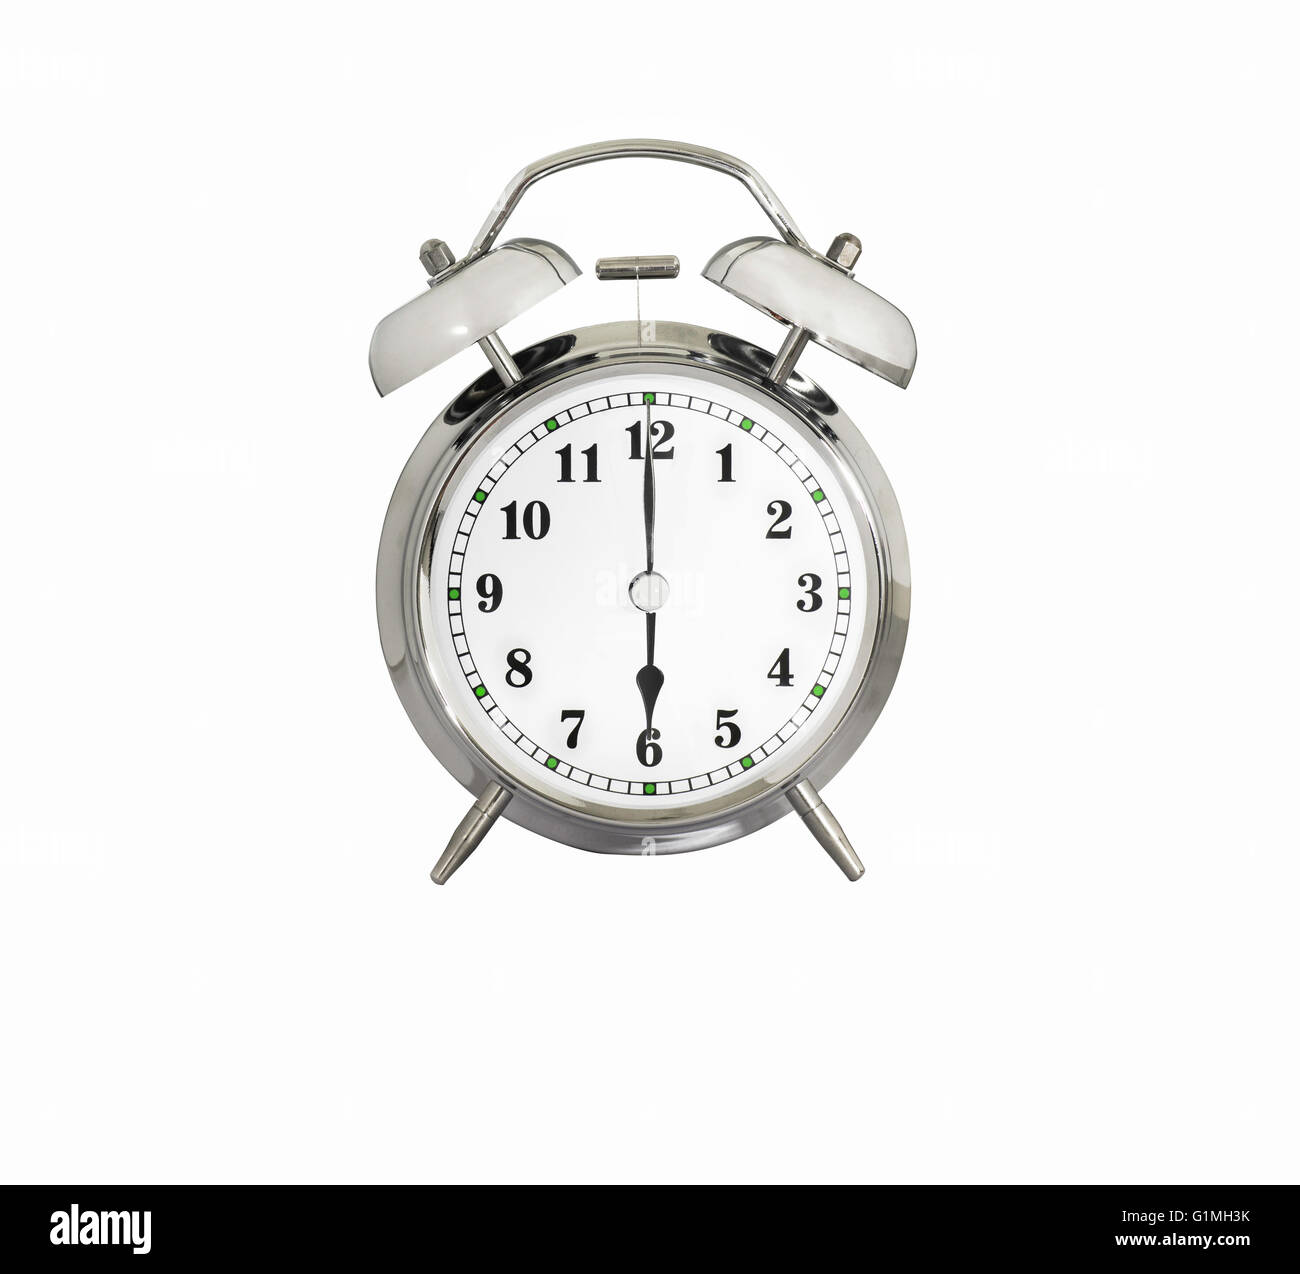 Alarm clock 6 am -Fotos und -Bildmaterial in hoher Auflösung – Alamy